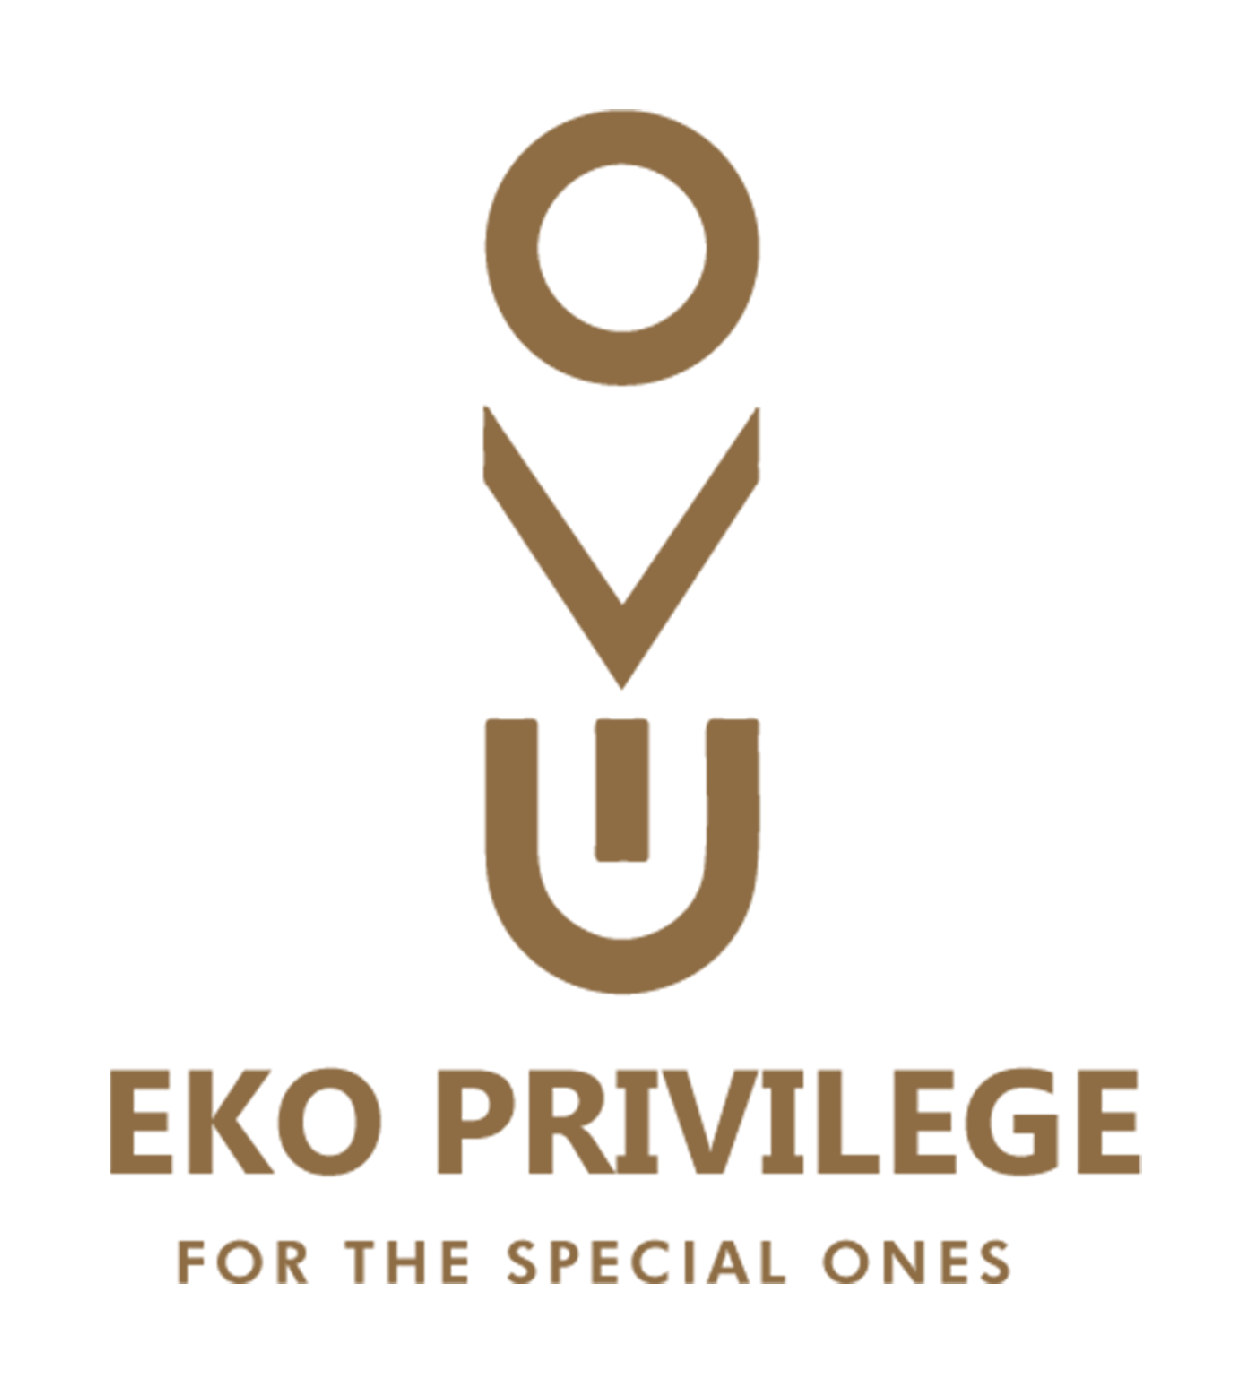 Eko Privilege